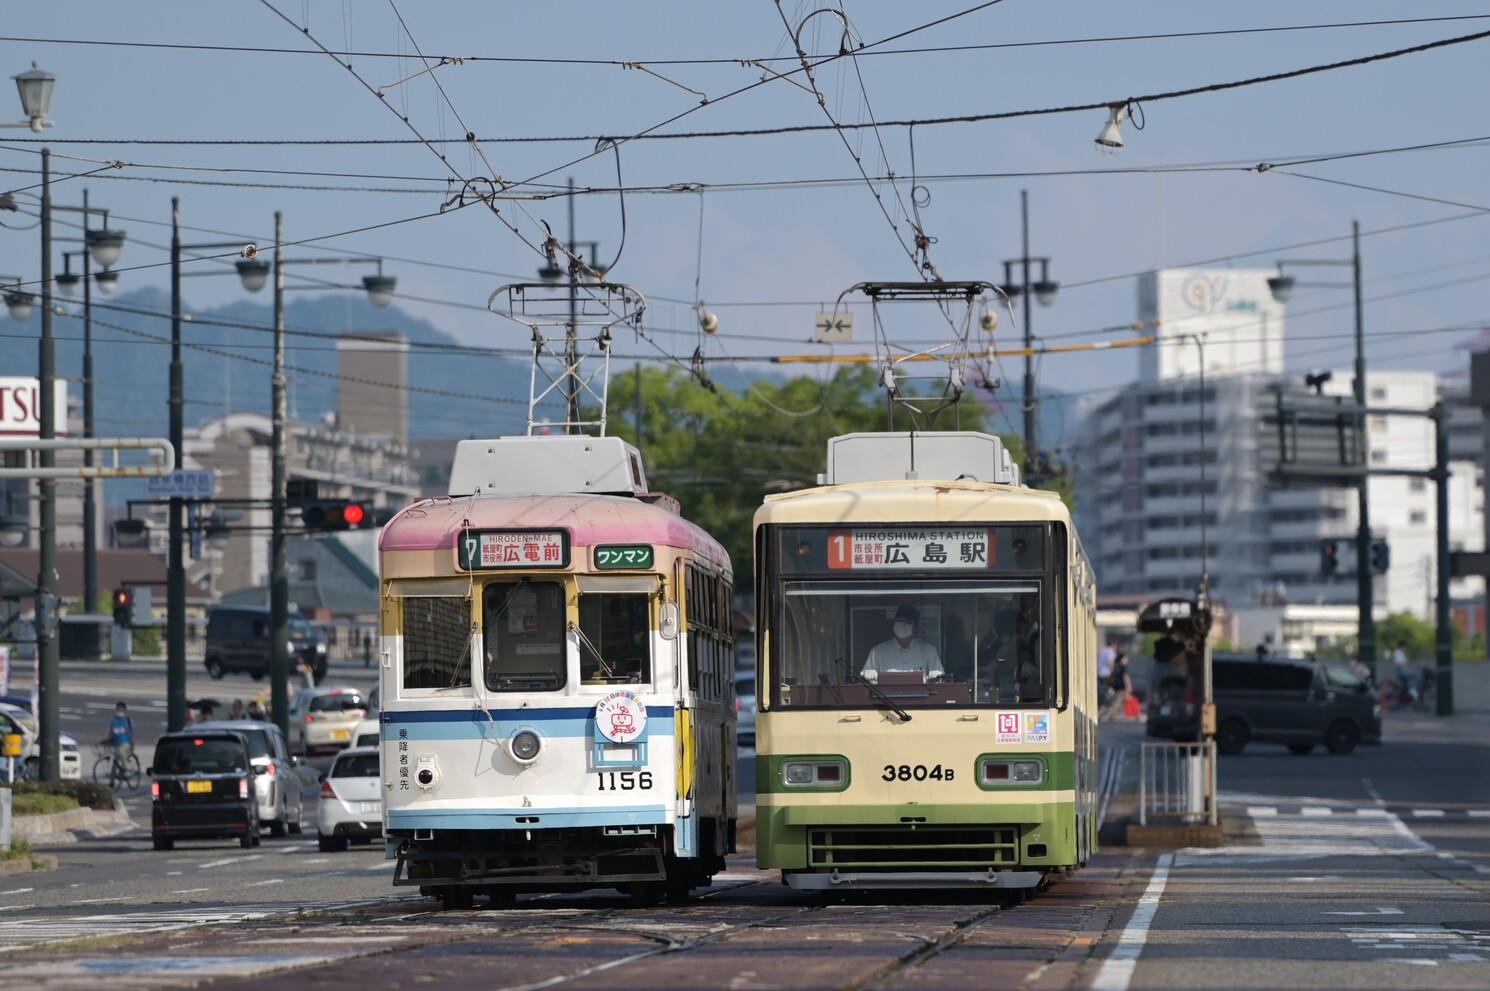 Хиросима, Kawasaki № 1156; Хиросима, Green Liner Hiroshima series 3800 № 3804